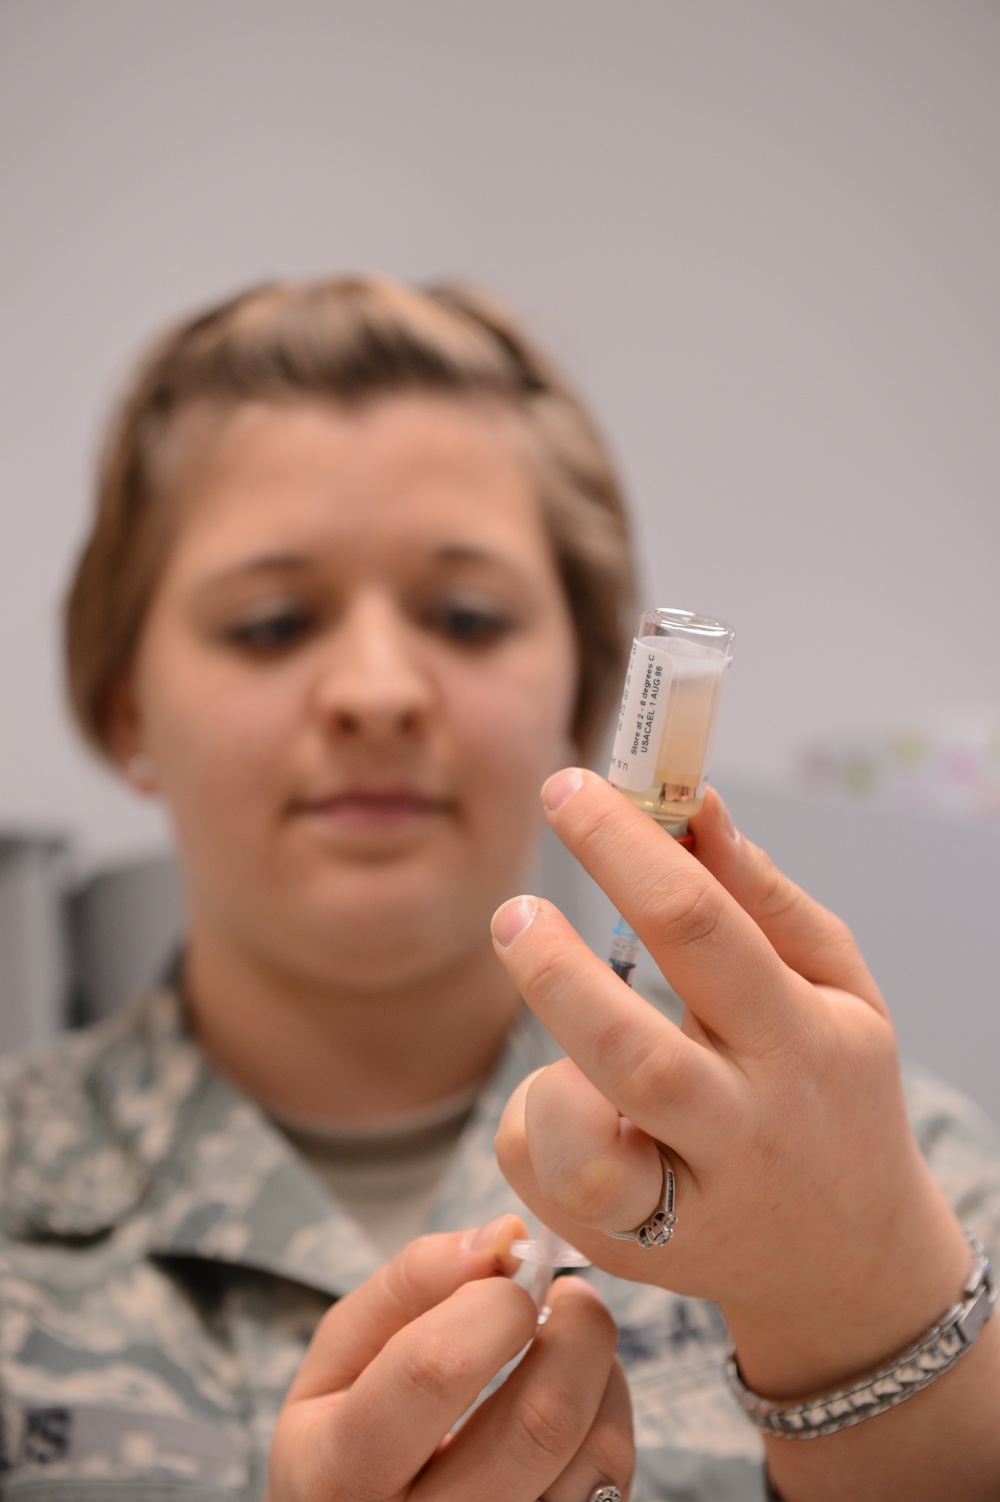 Staff sergeant preps vaccine